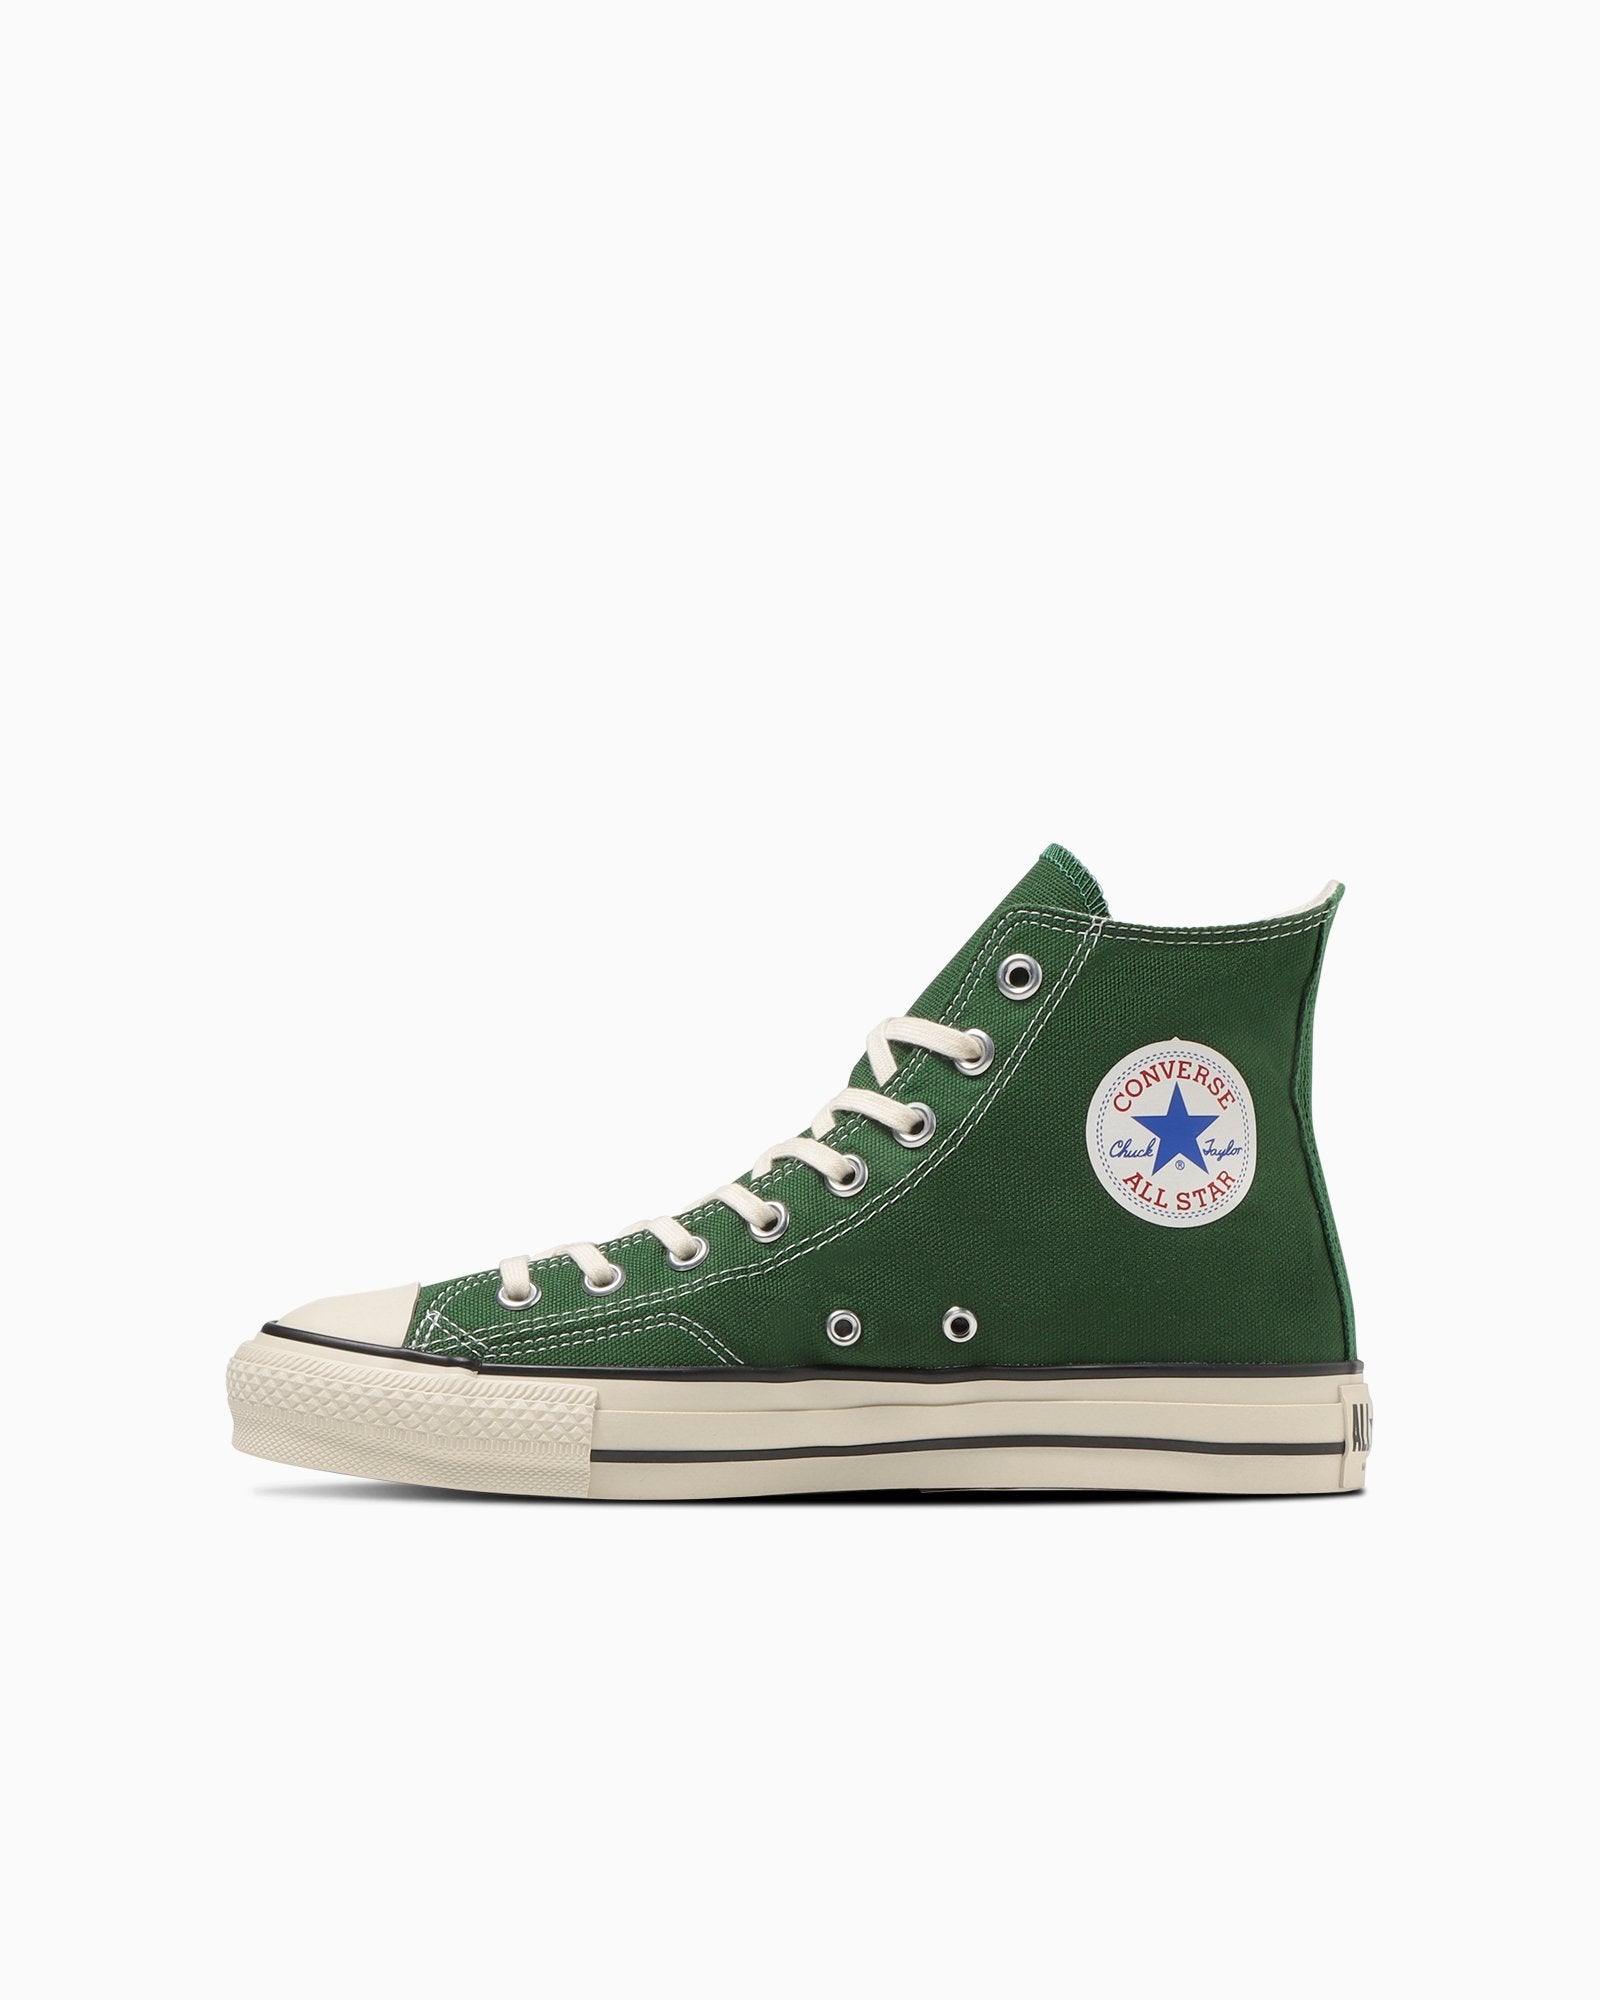 日本製 CONVERSE ALL STAR J 80s OX GREEN靴